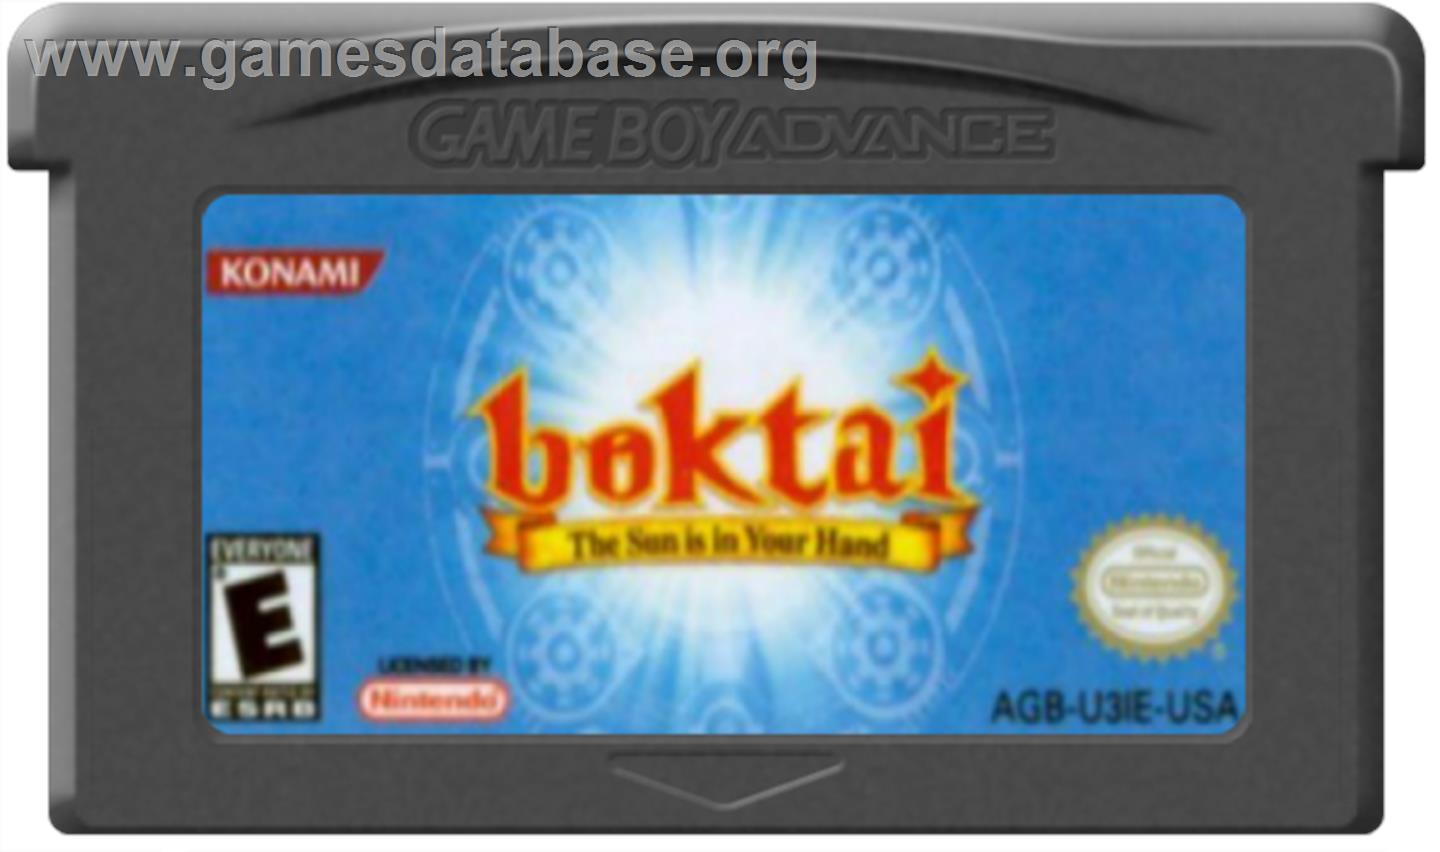 Boktai: The Sun is in Your Hand - Nintendo Game Boy Advance - Artwork - Cartridge